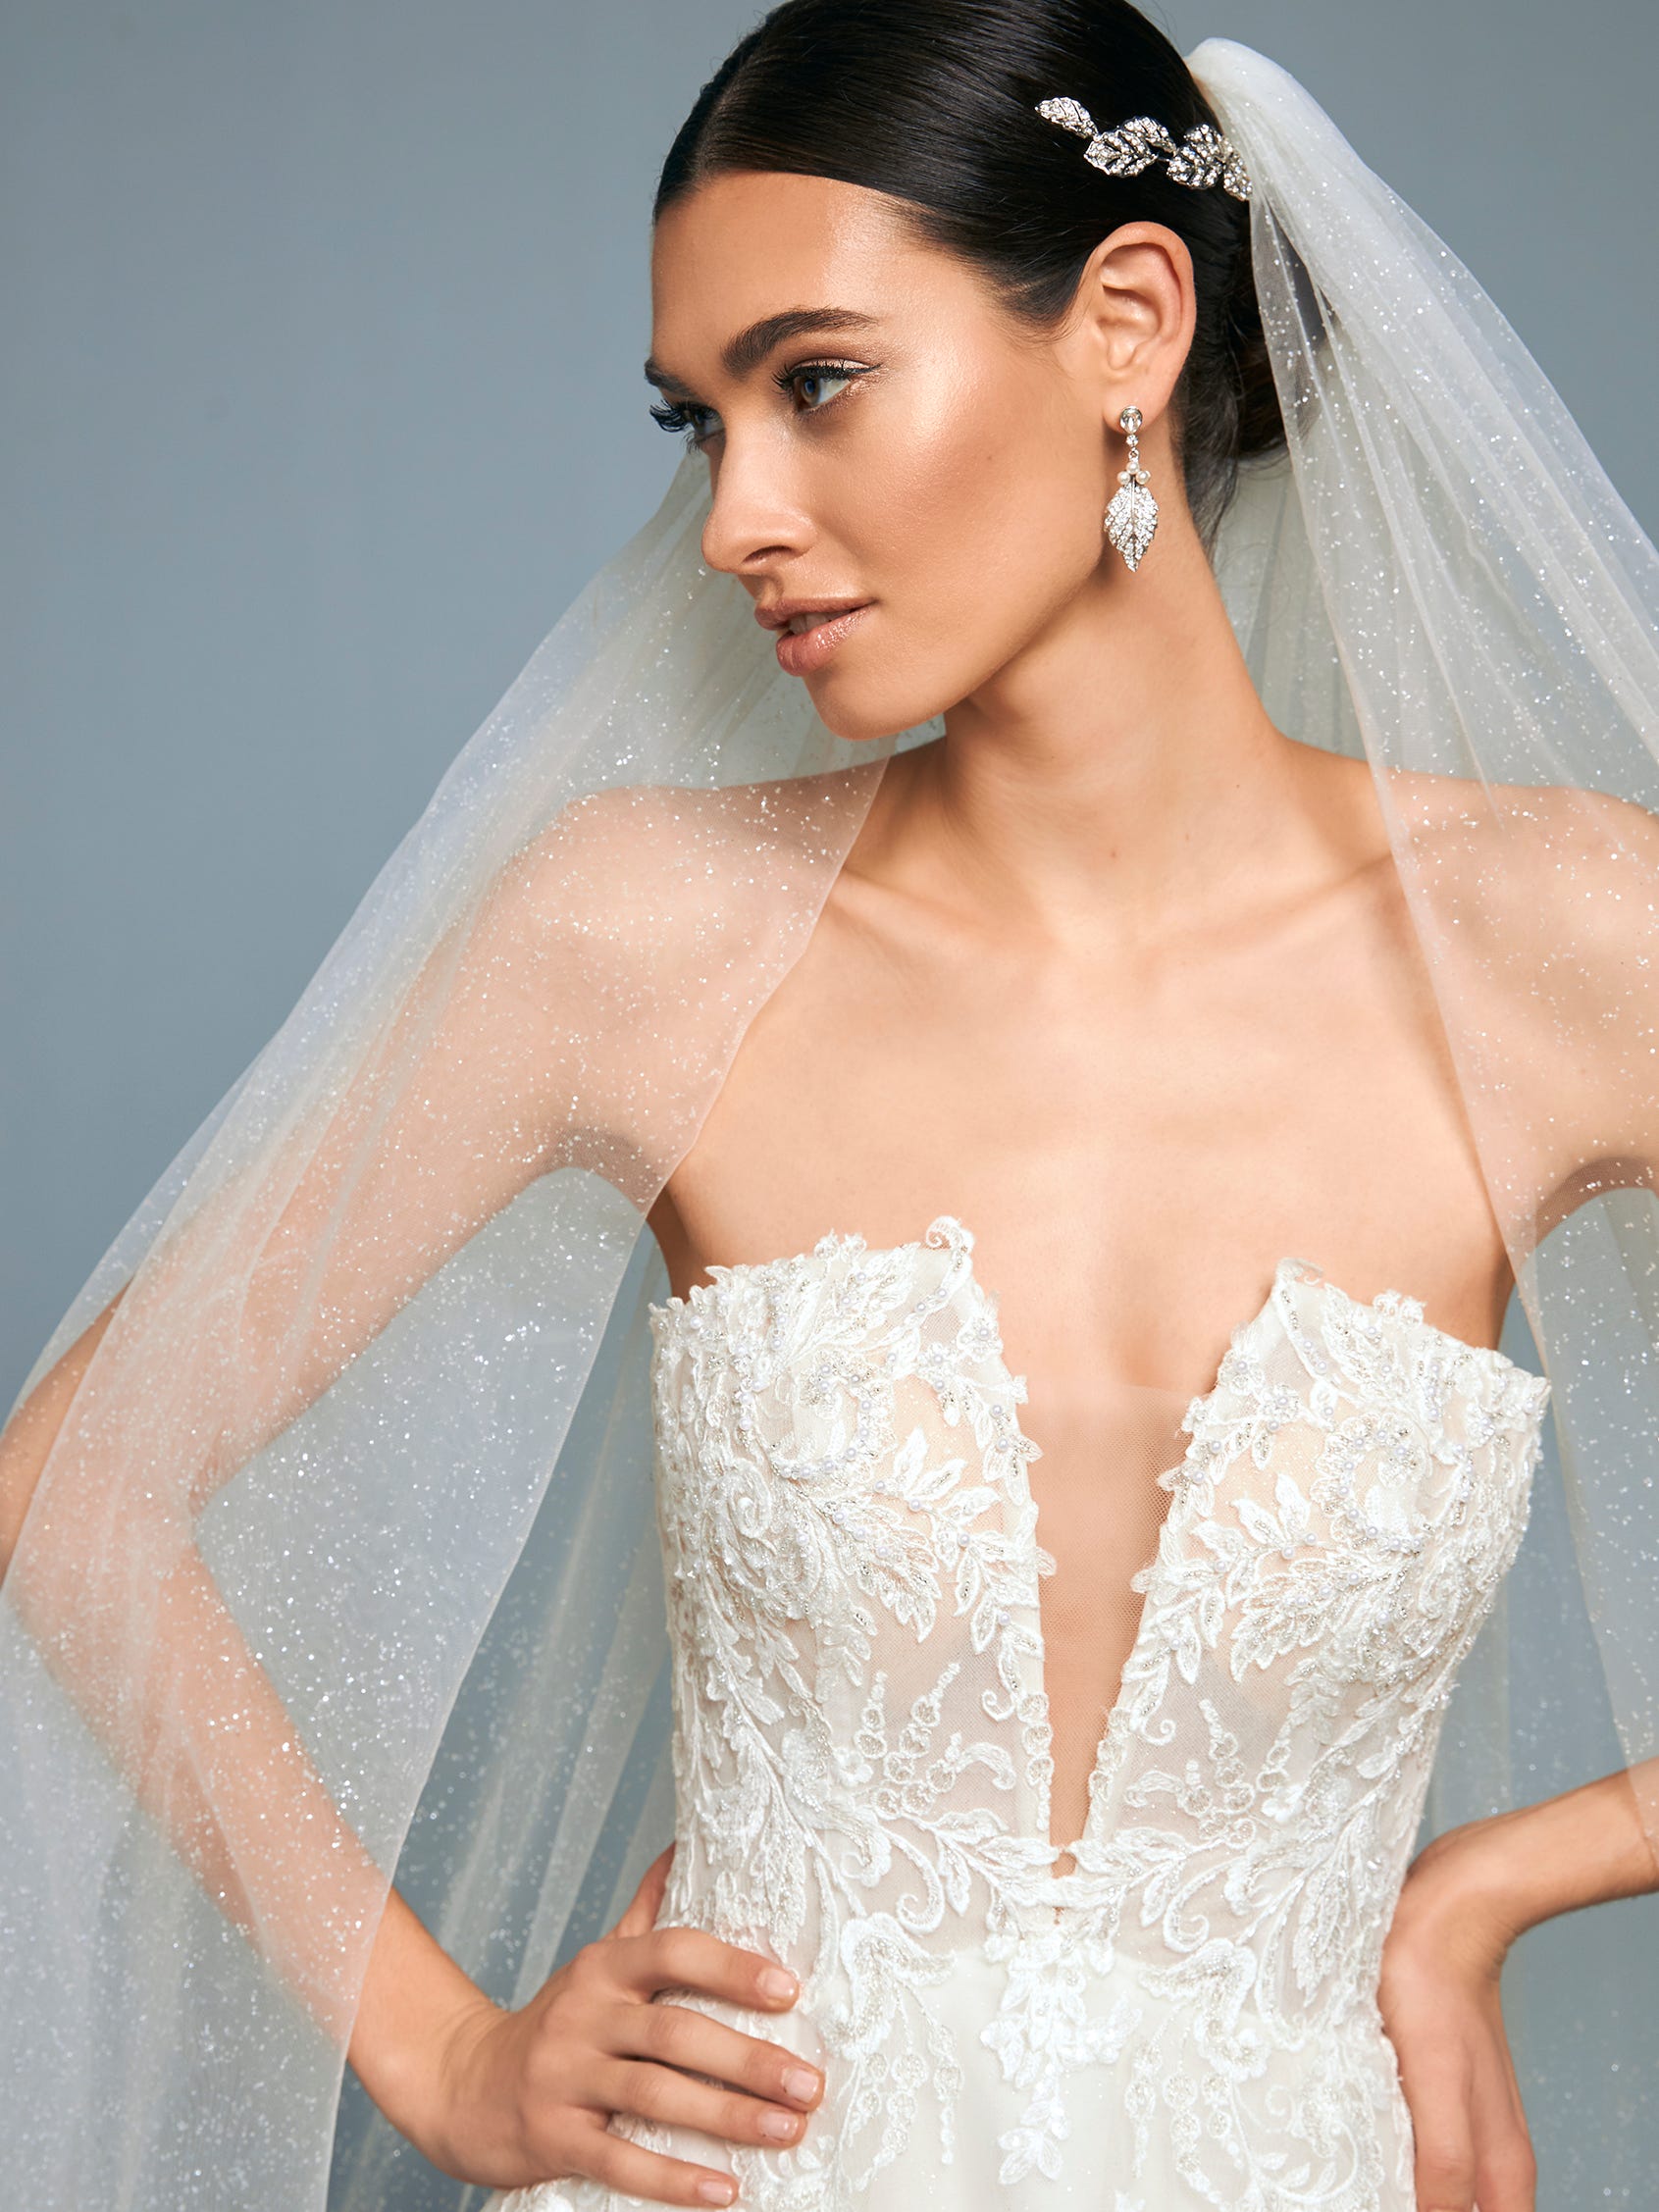 Selecting the Perfect Bridal Veil